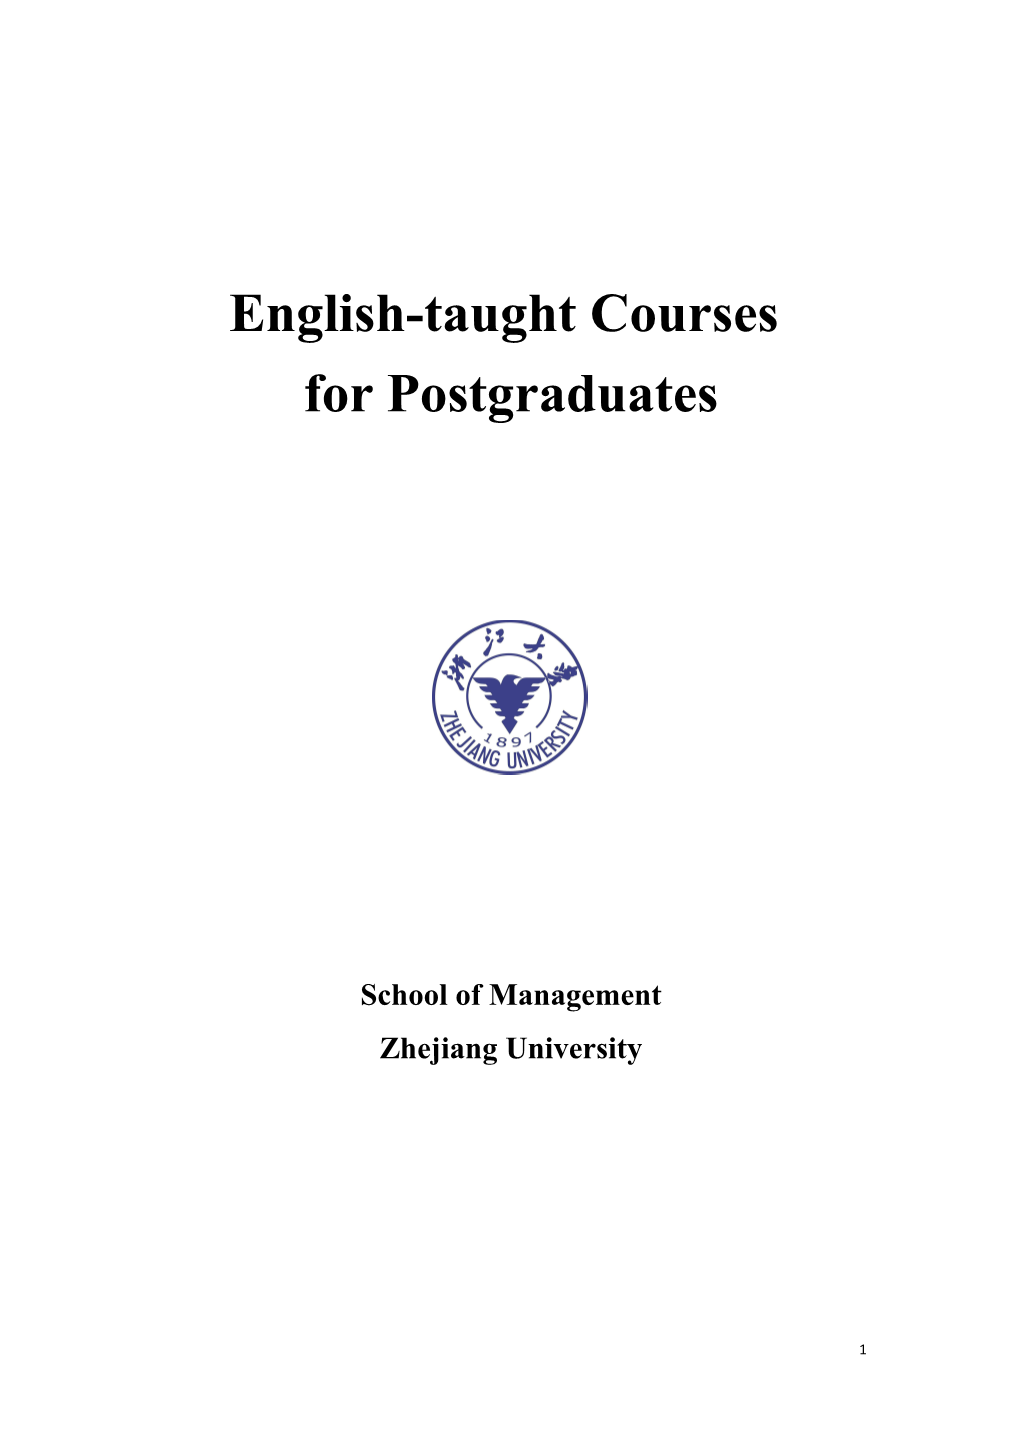 English-Taught Courses for Graduates